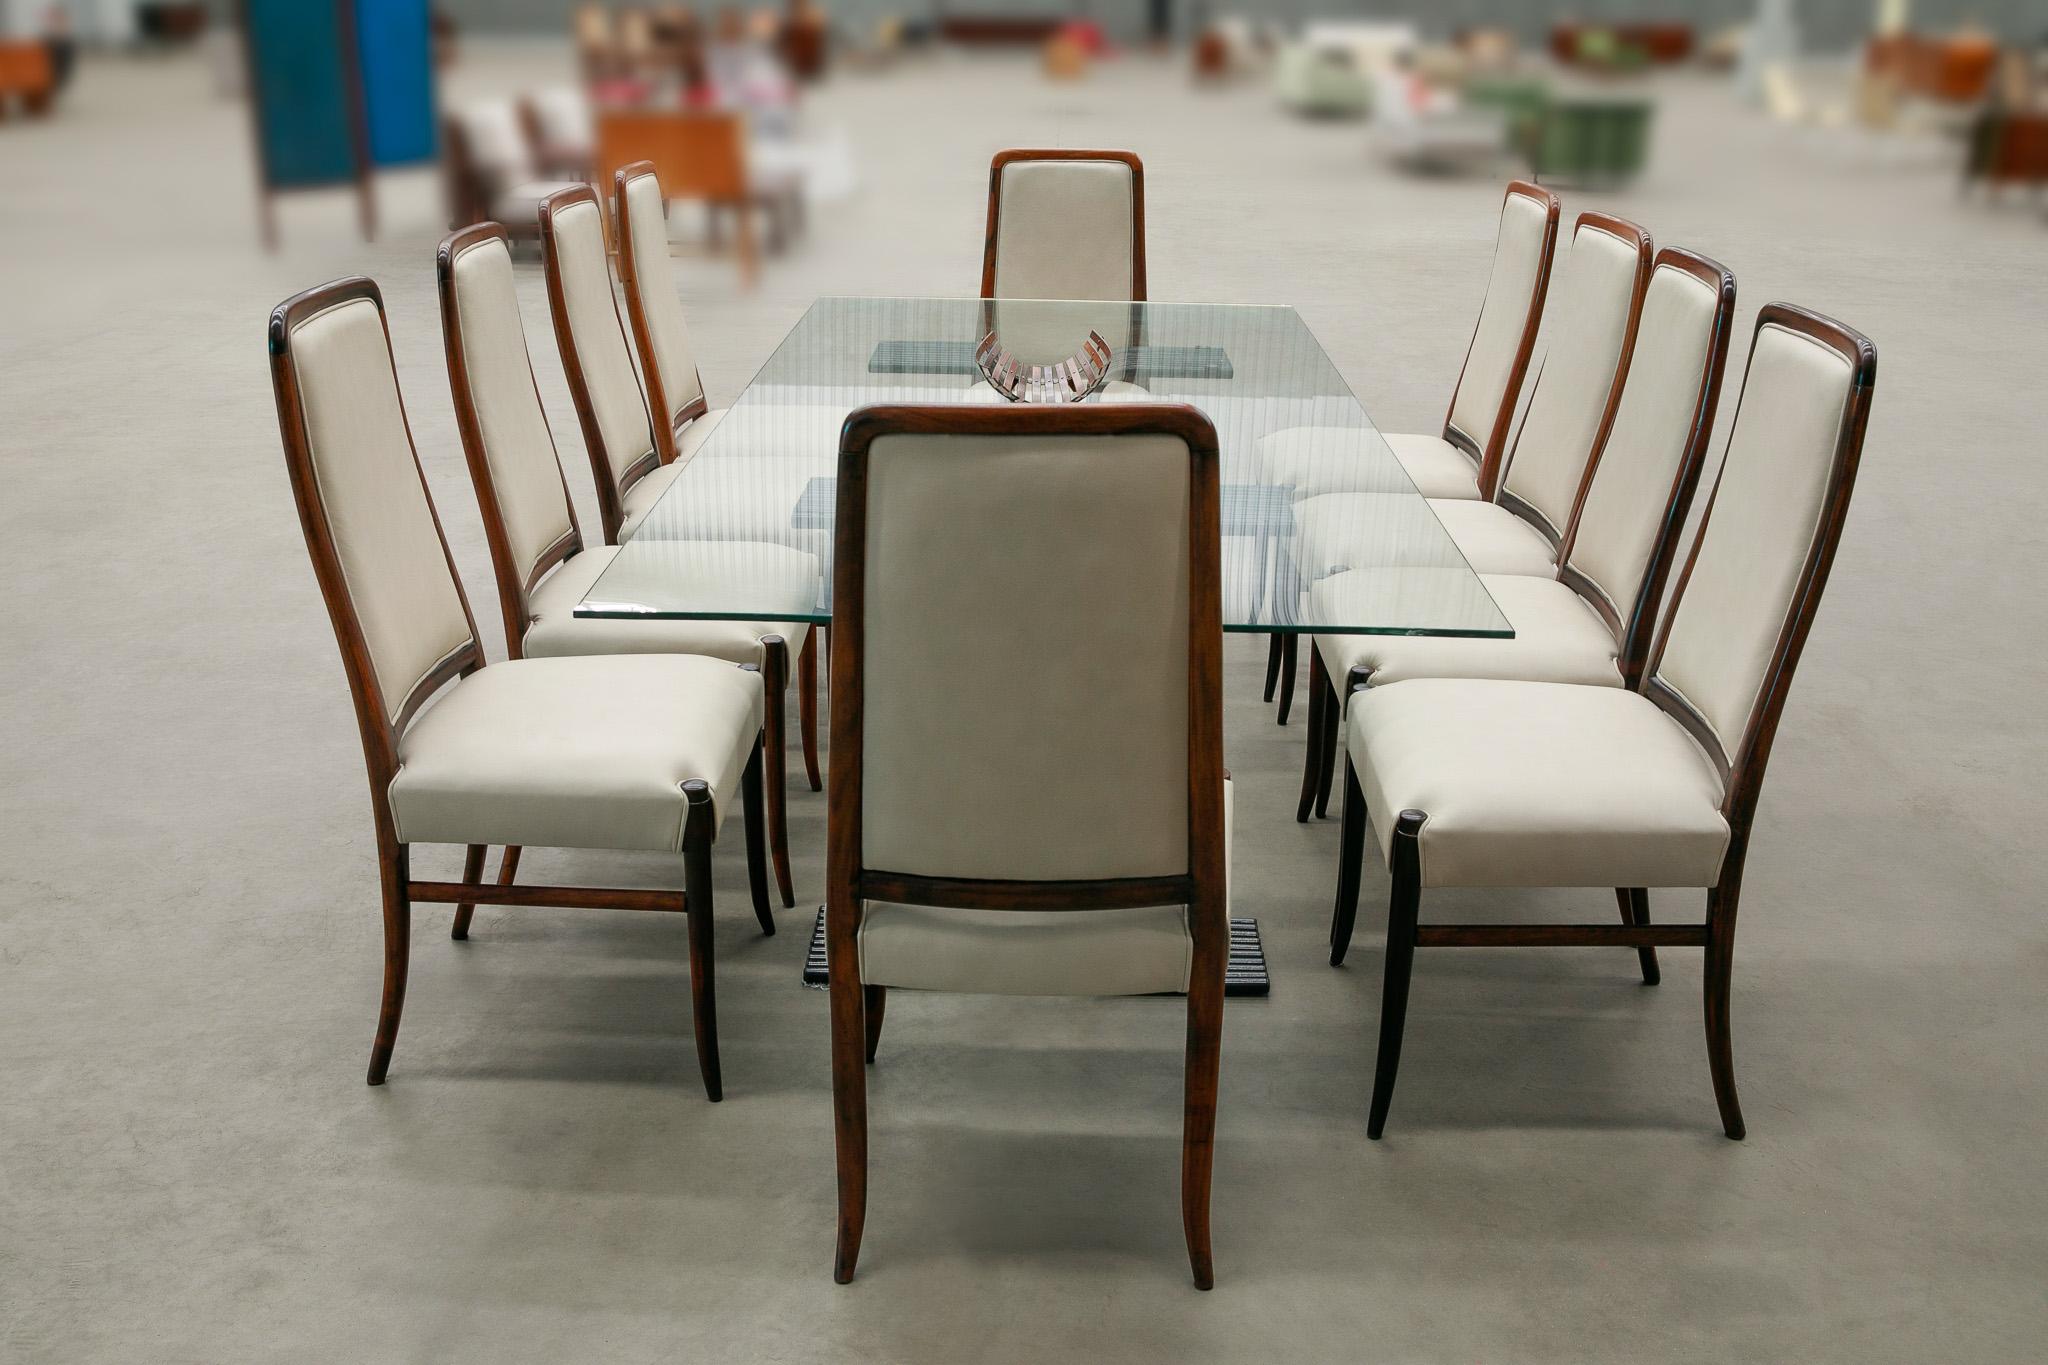 Brazilian Modern 10 Chair Set in Hardwood & Beige Leather Joaquim Tenreiro 1960s For Sale 4